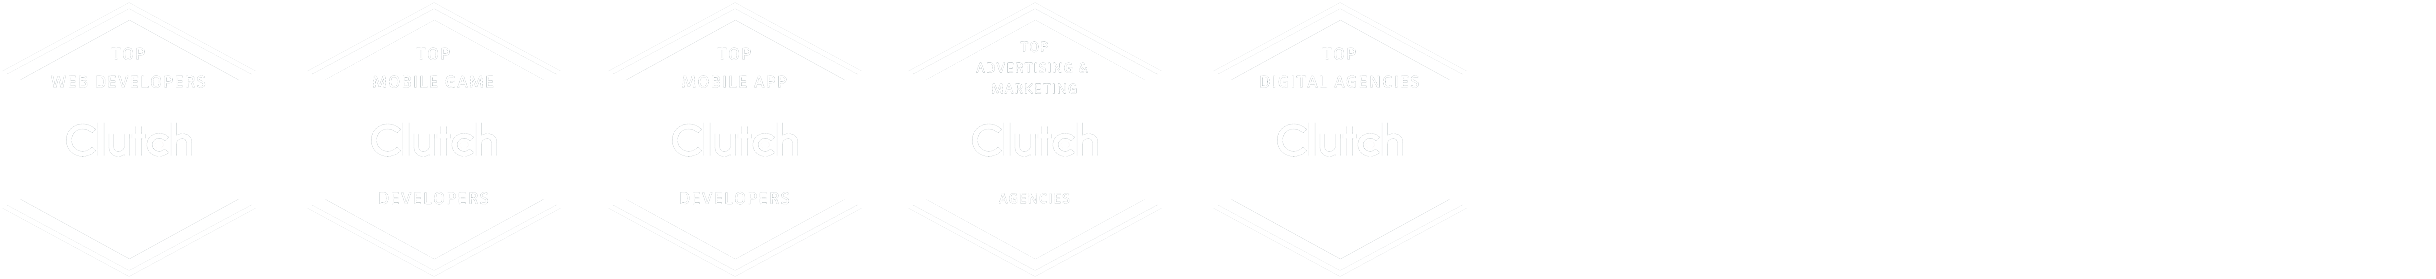 clutch_digital_awards